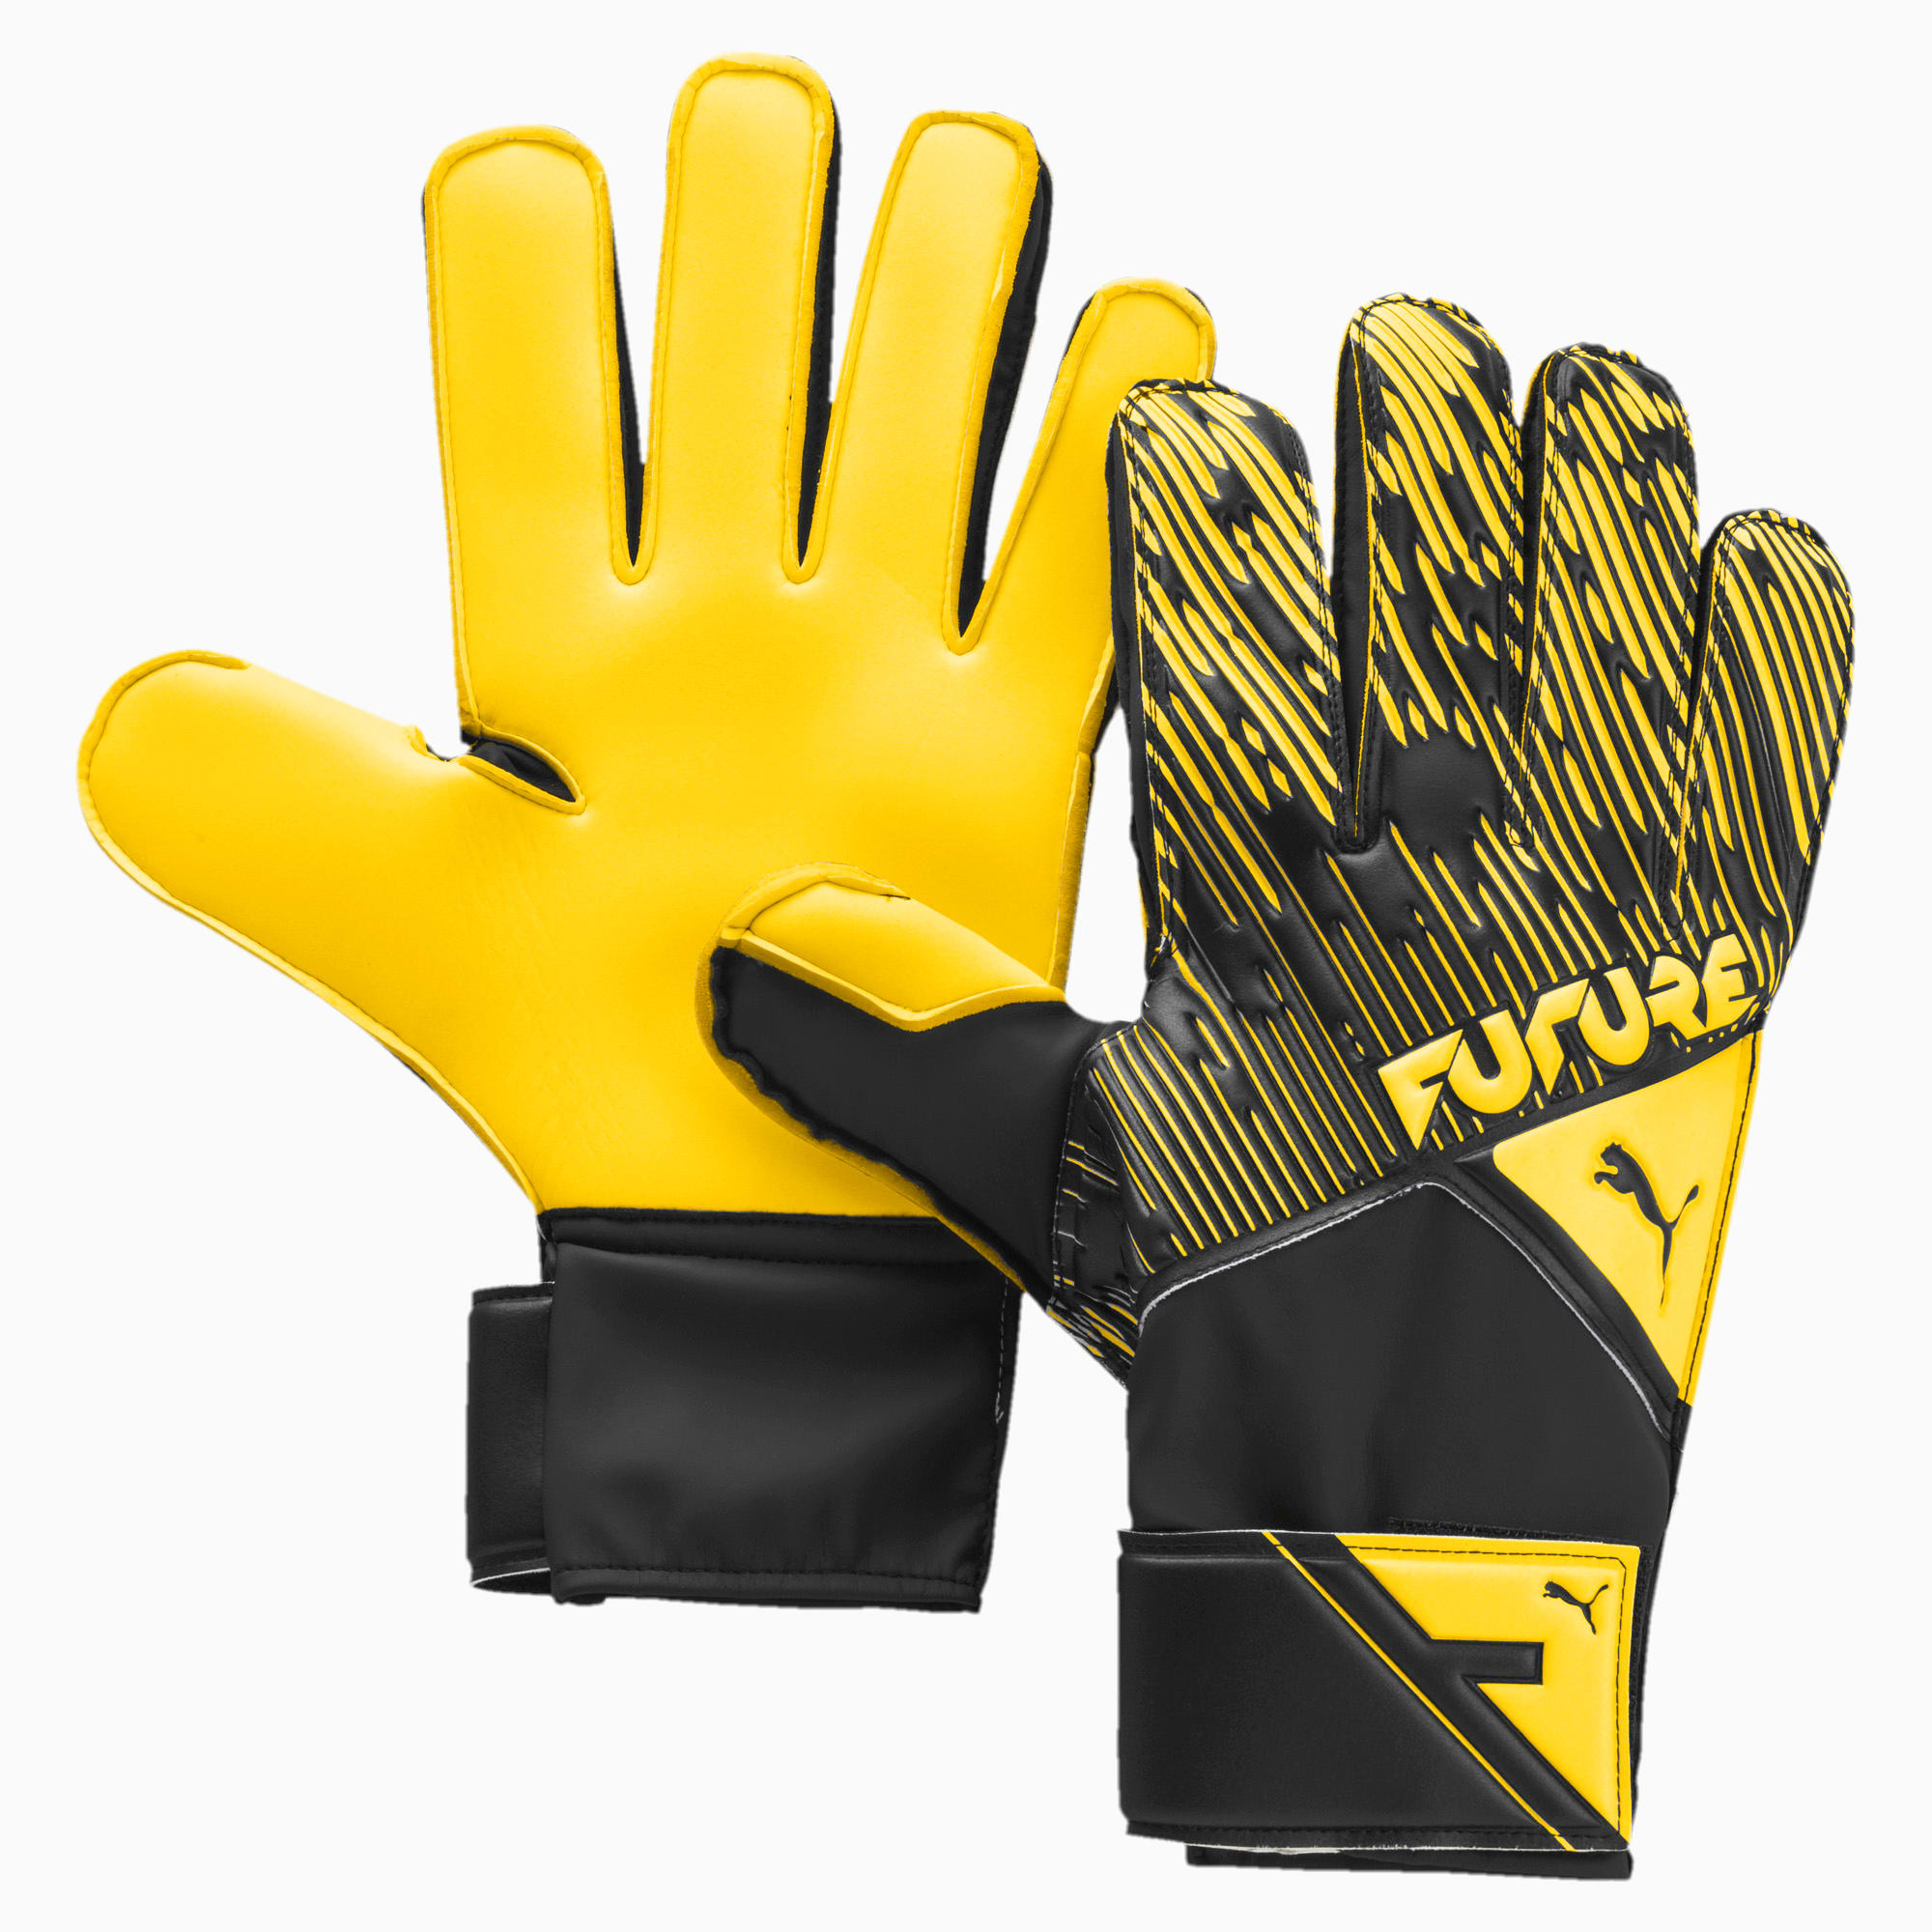 FUTURE Grip 5.4 Goalkeeper Gloves 